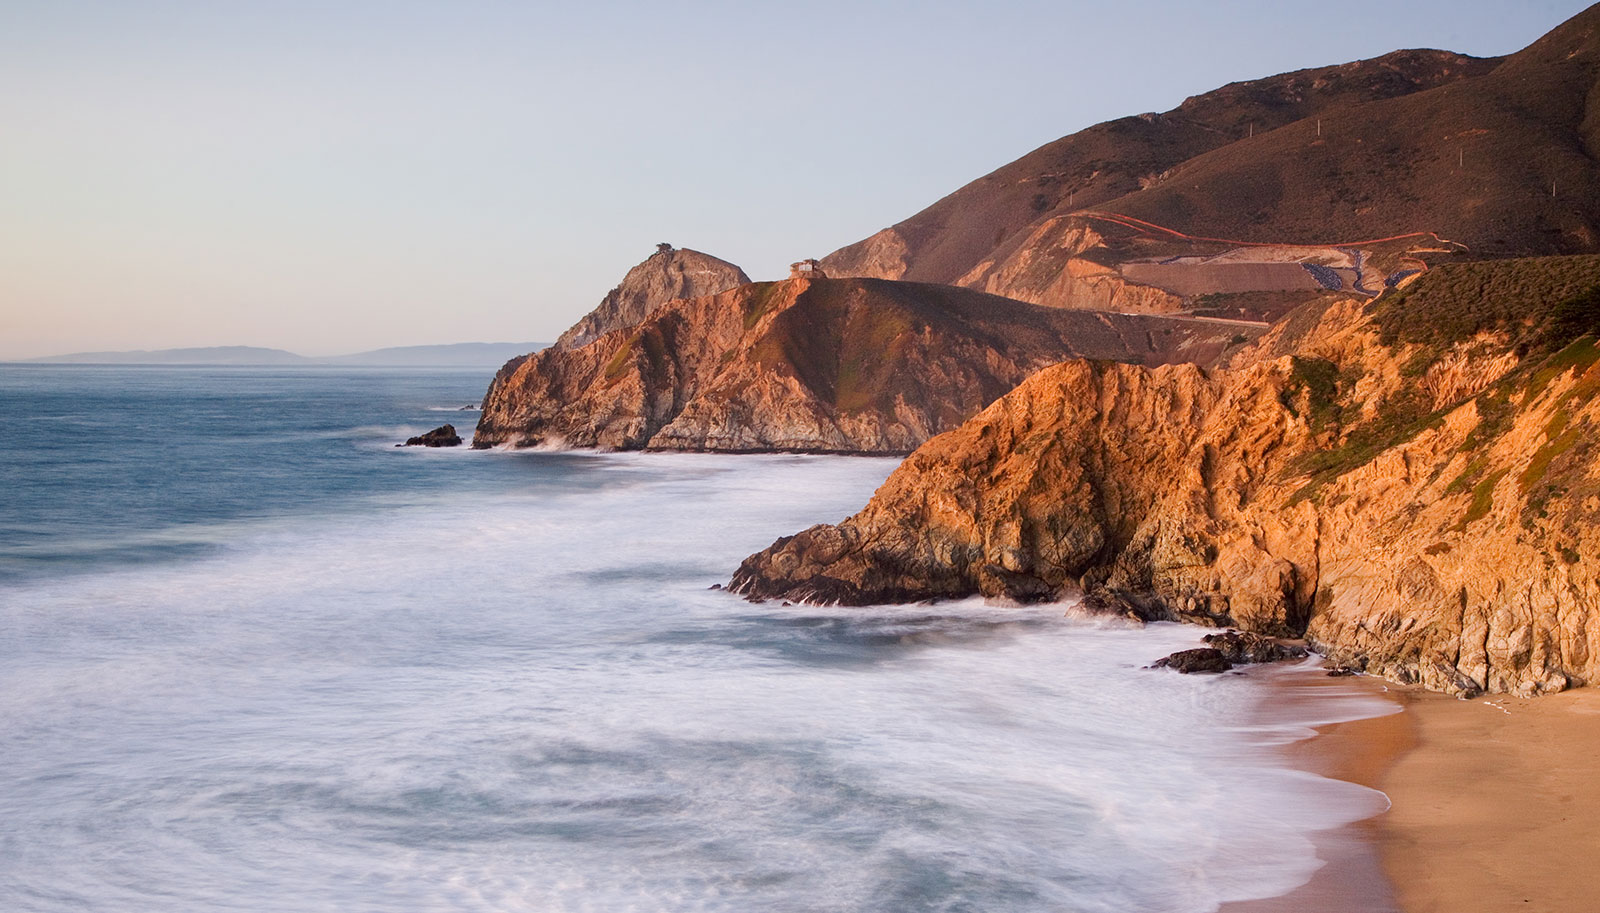 San Mateo County Coastline climate change risks